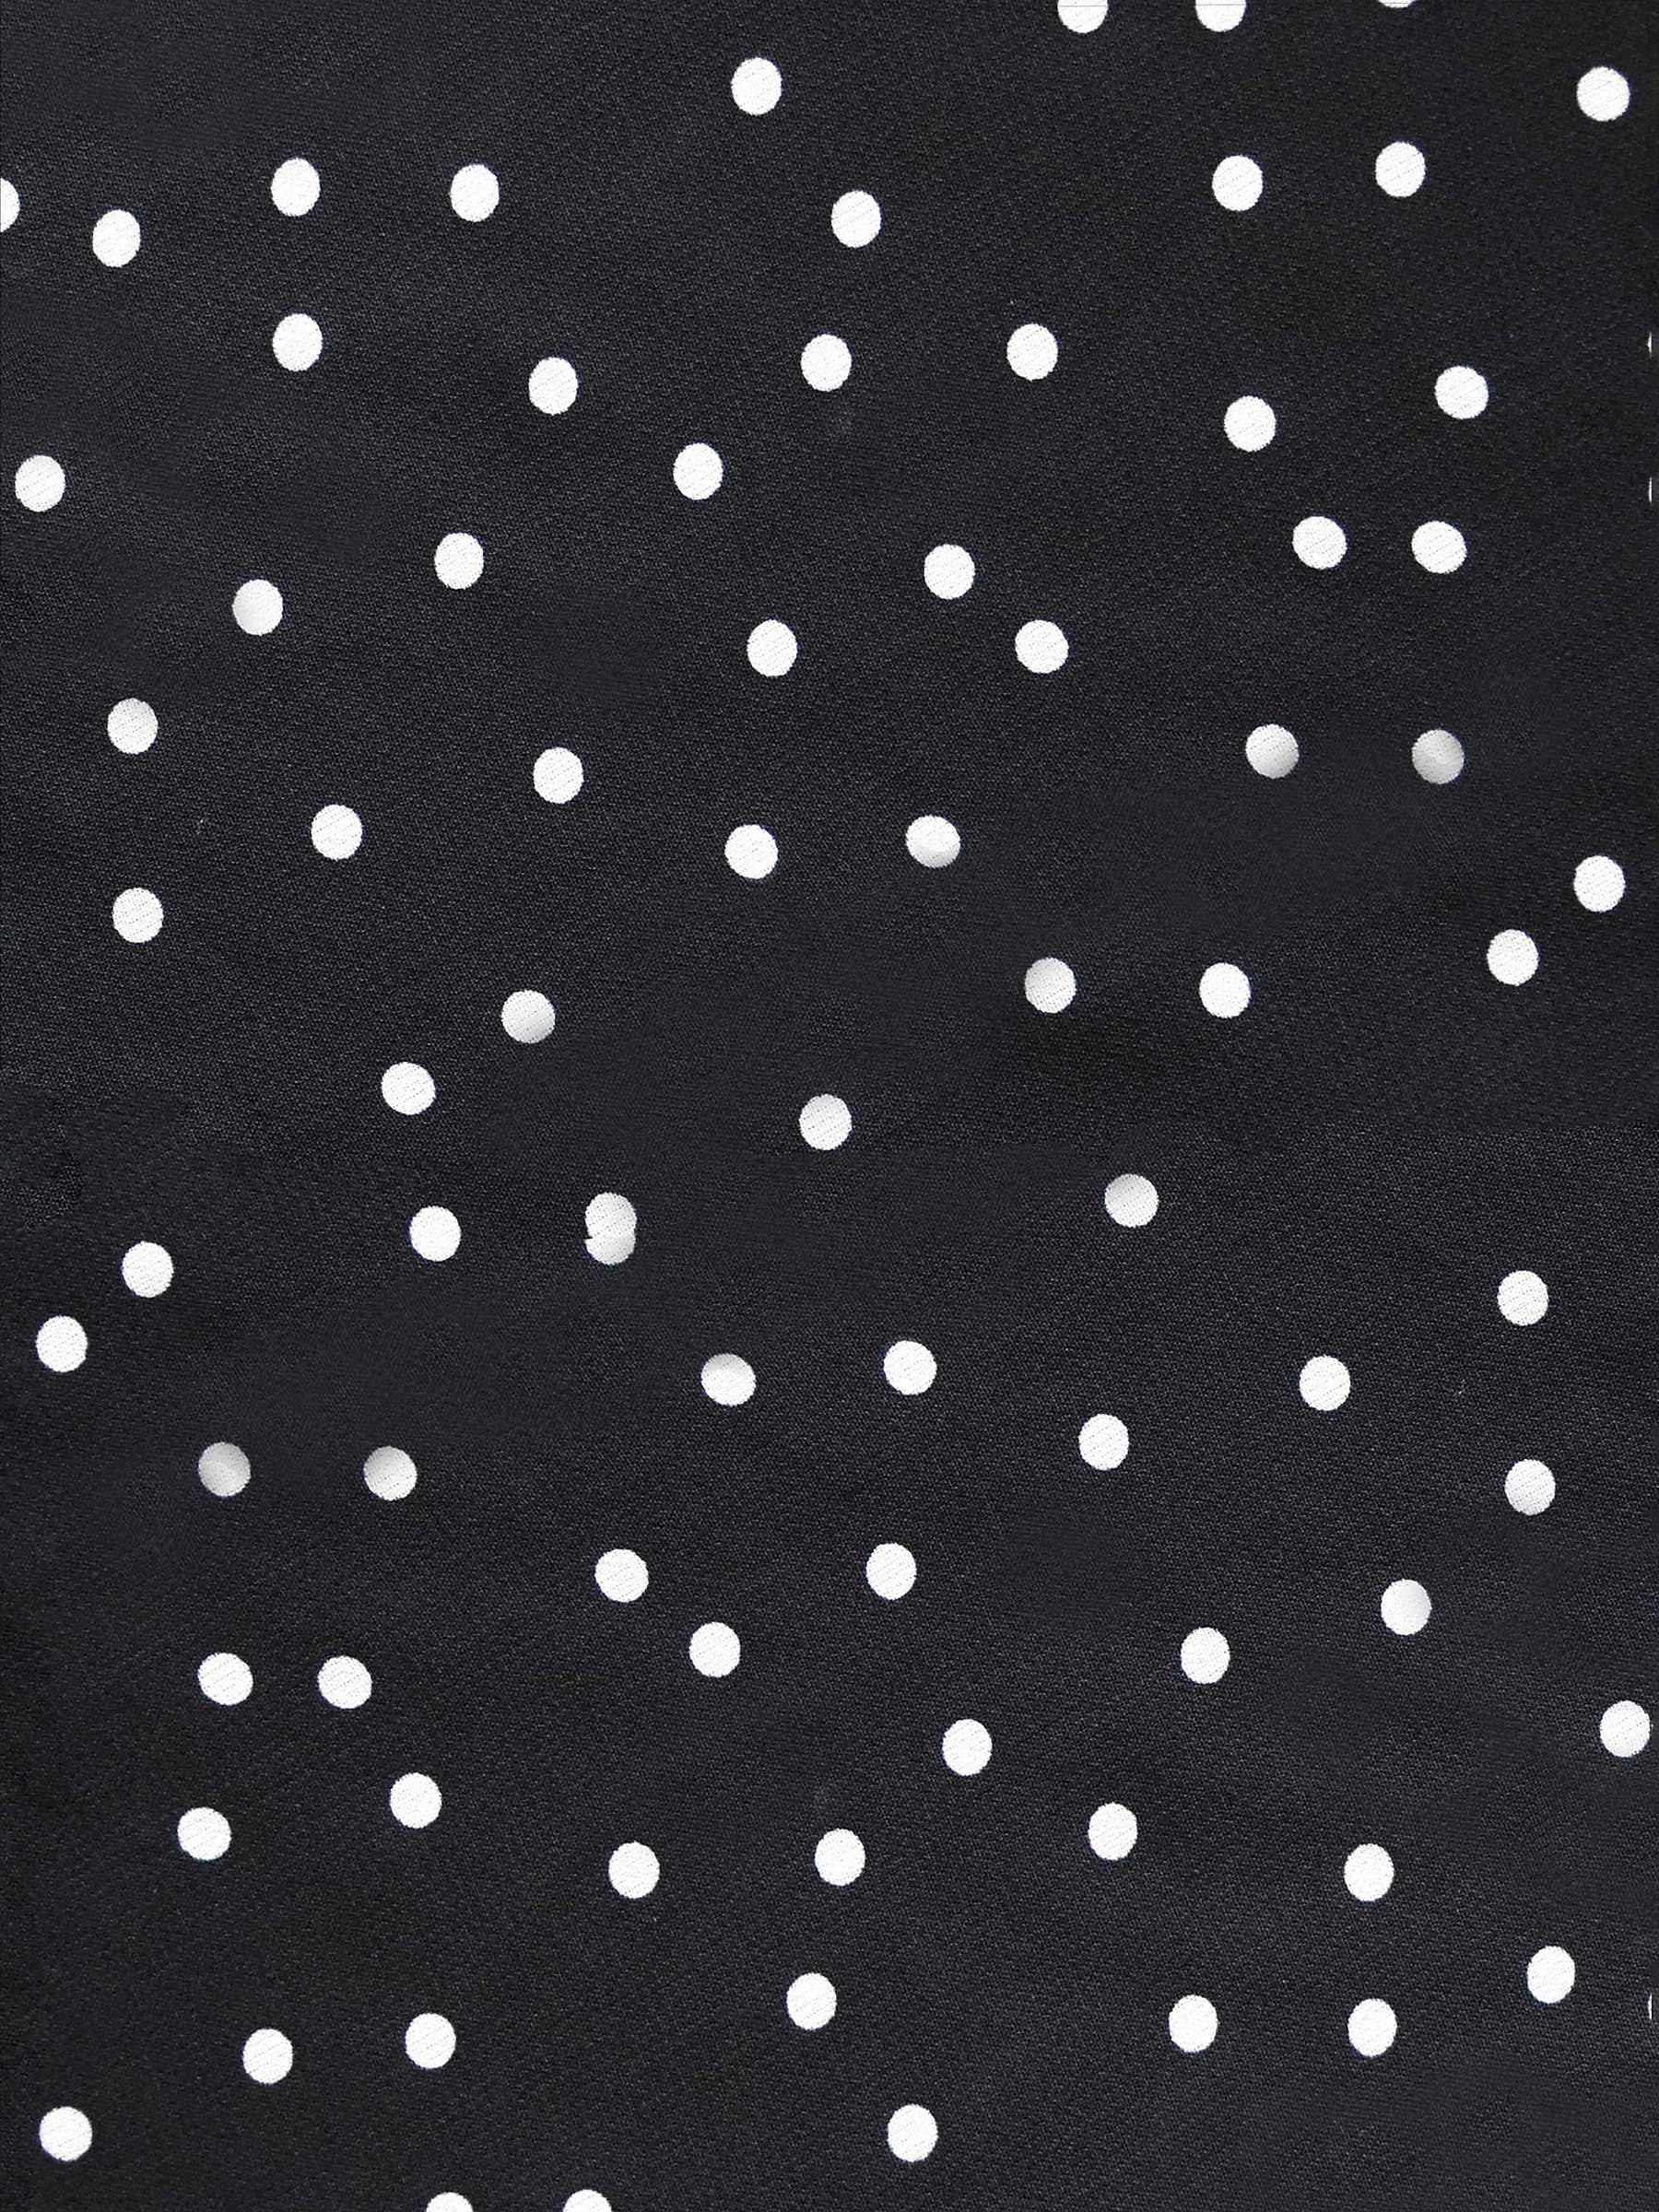 Buy Live Unlimited Curve Polka Dot Bias Cut Midi Dress, Black Online at johnlewis.com